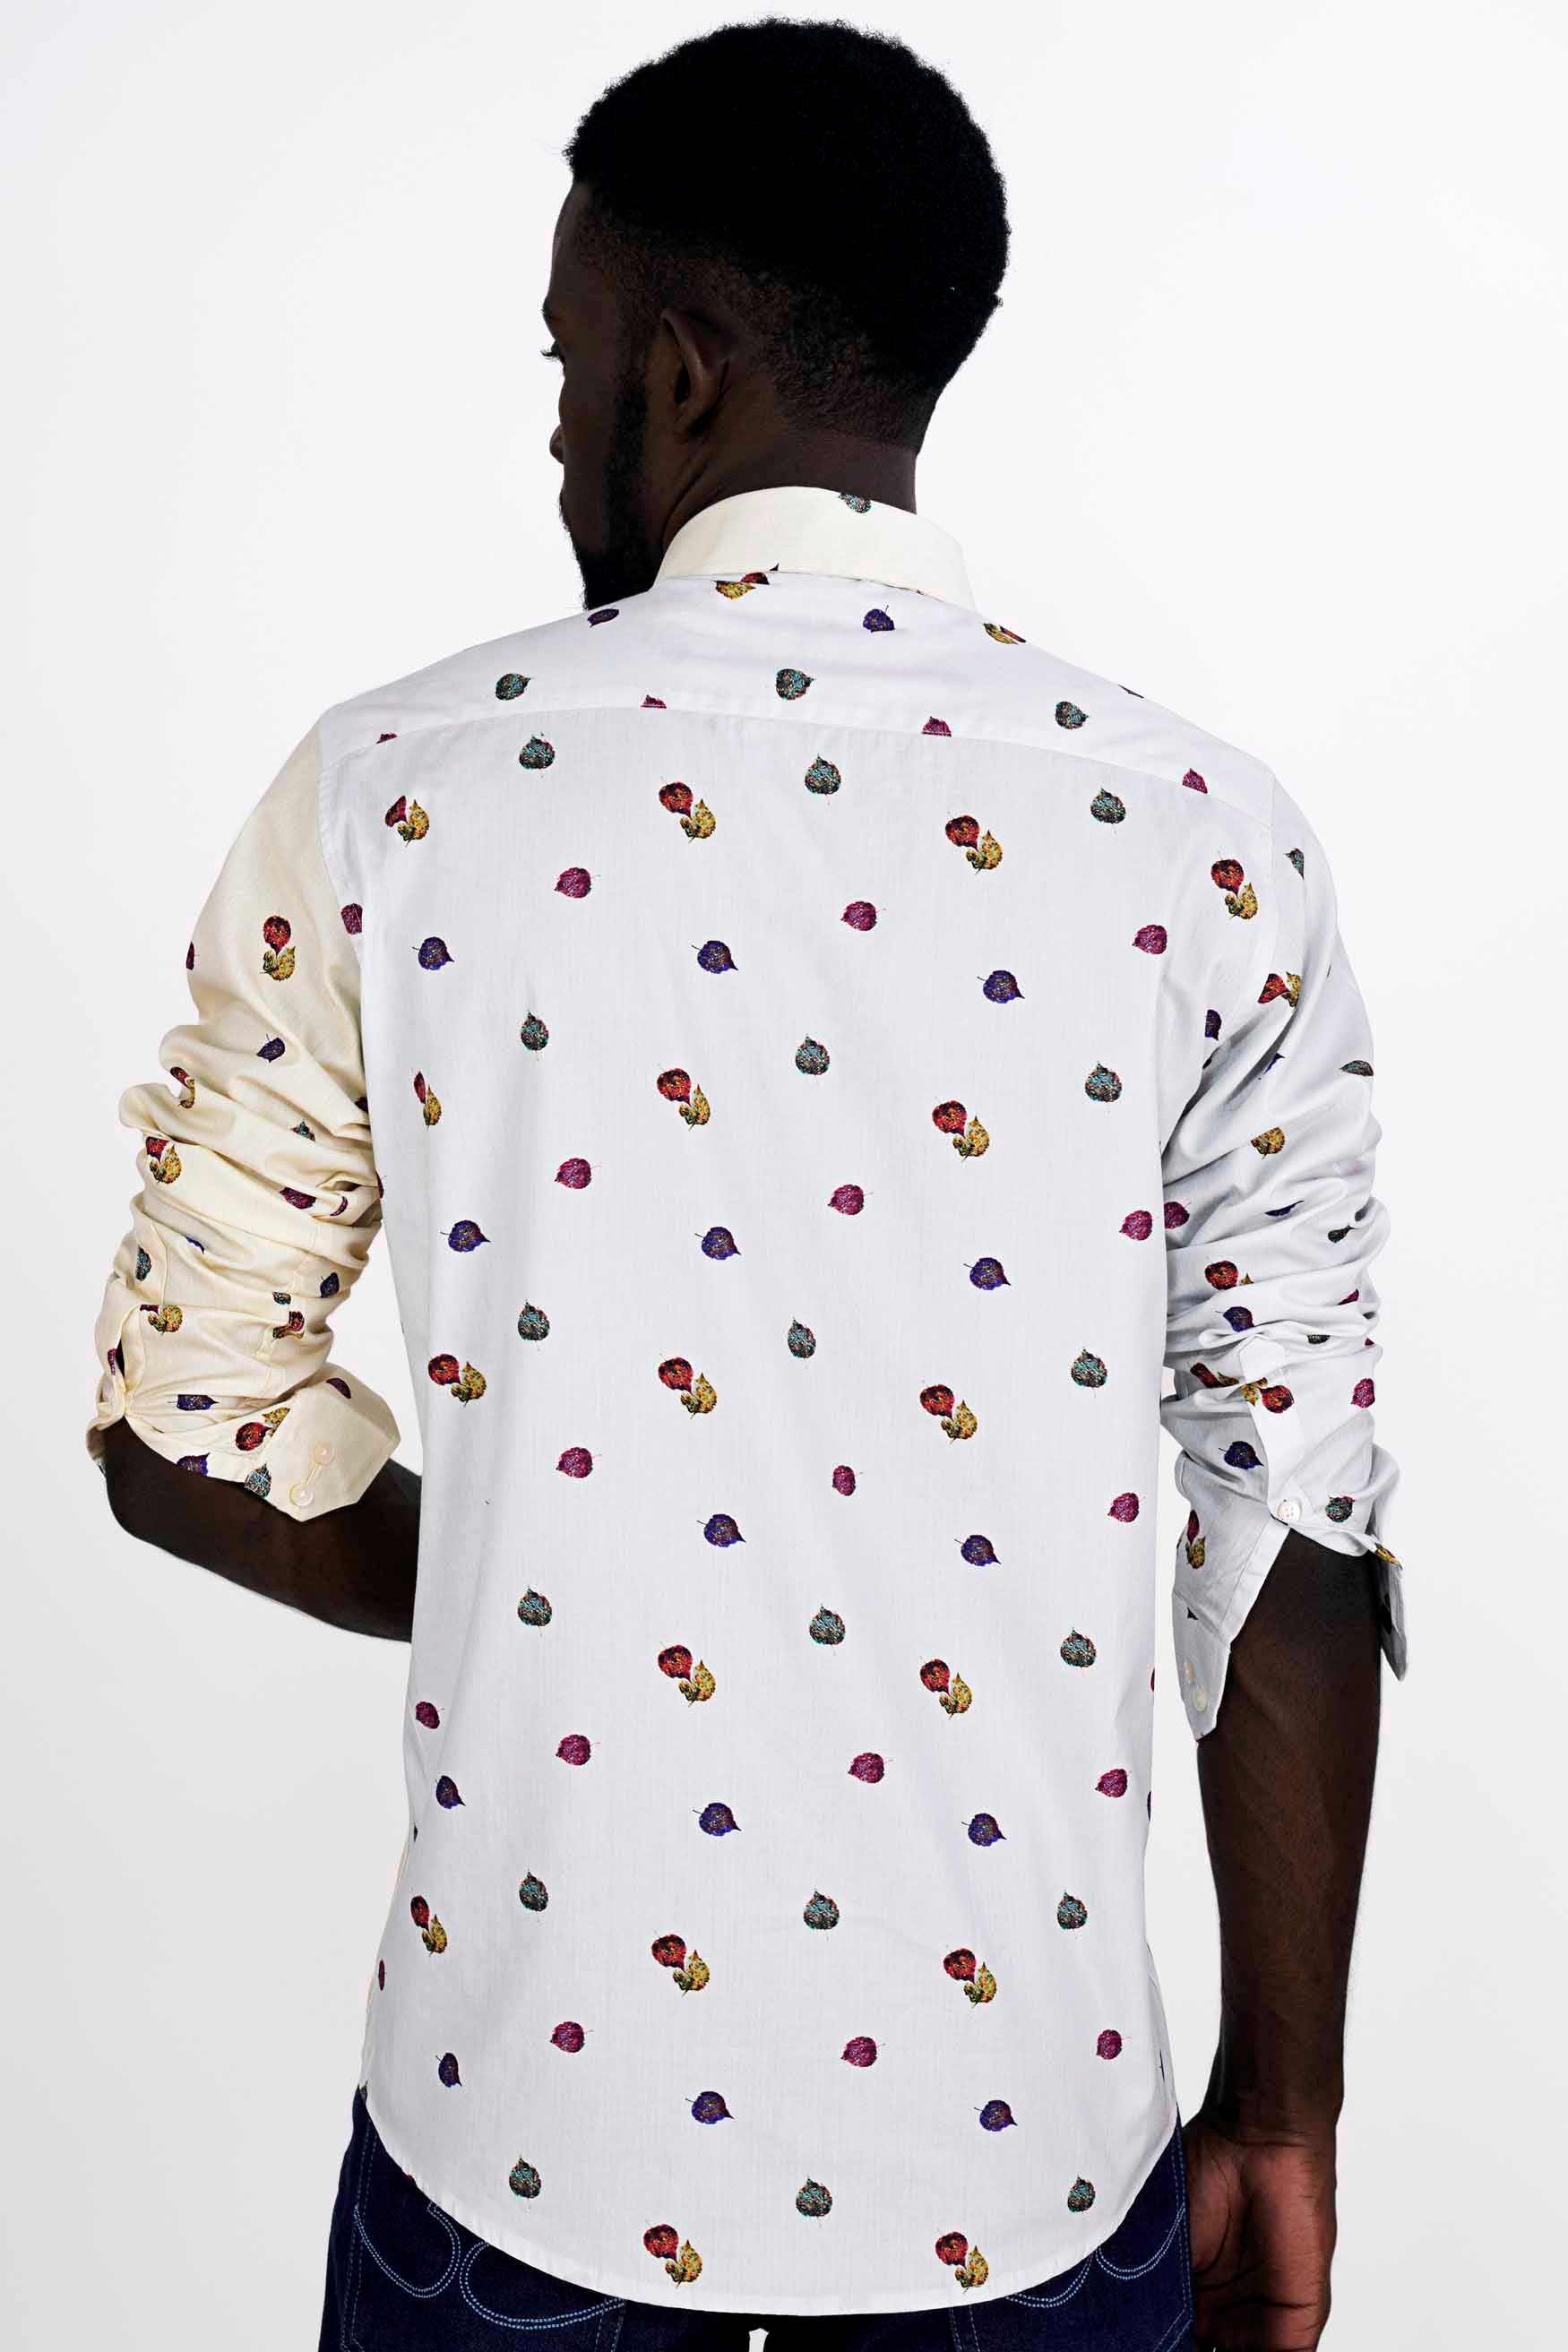 Half Bright White with Half Hampton Beige Leaves Printed Super Soft Premium Cotton Designer Shirt